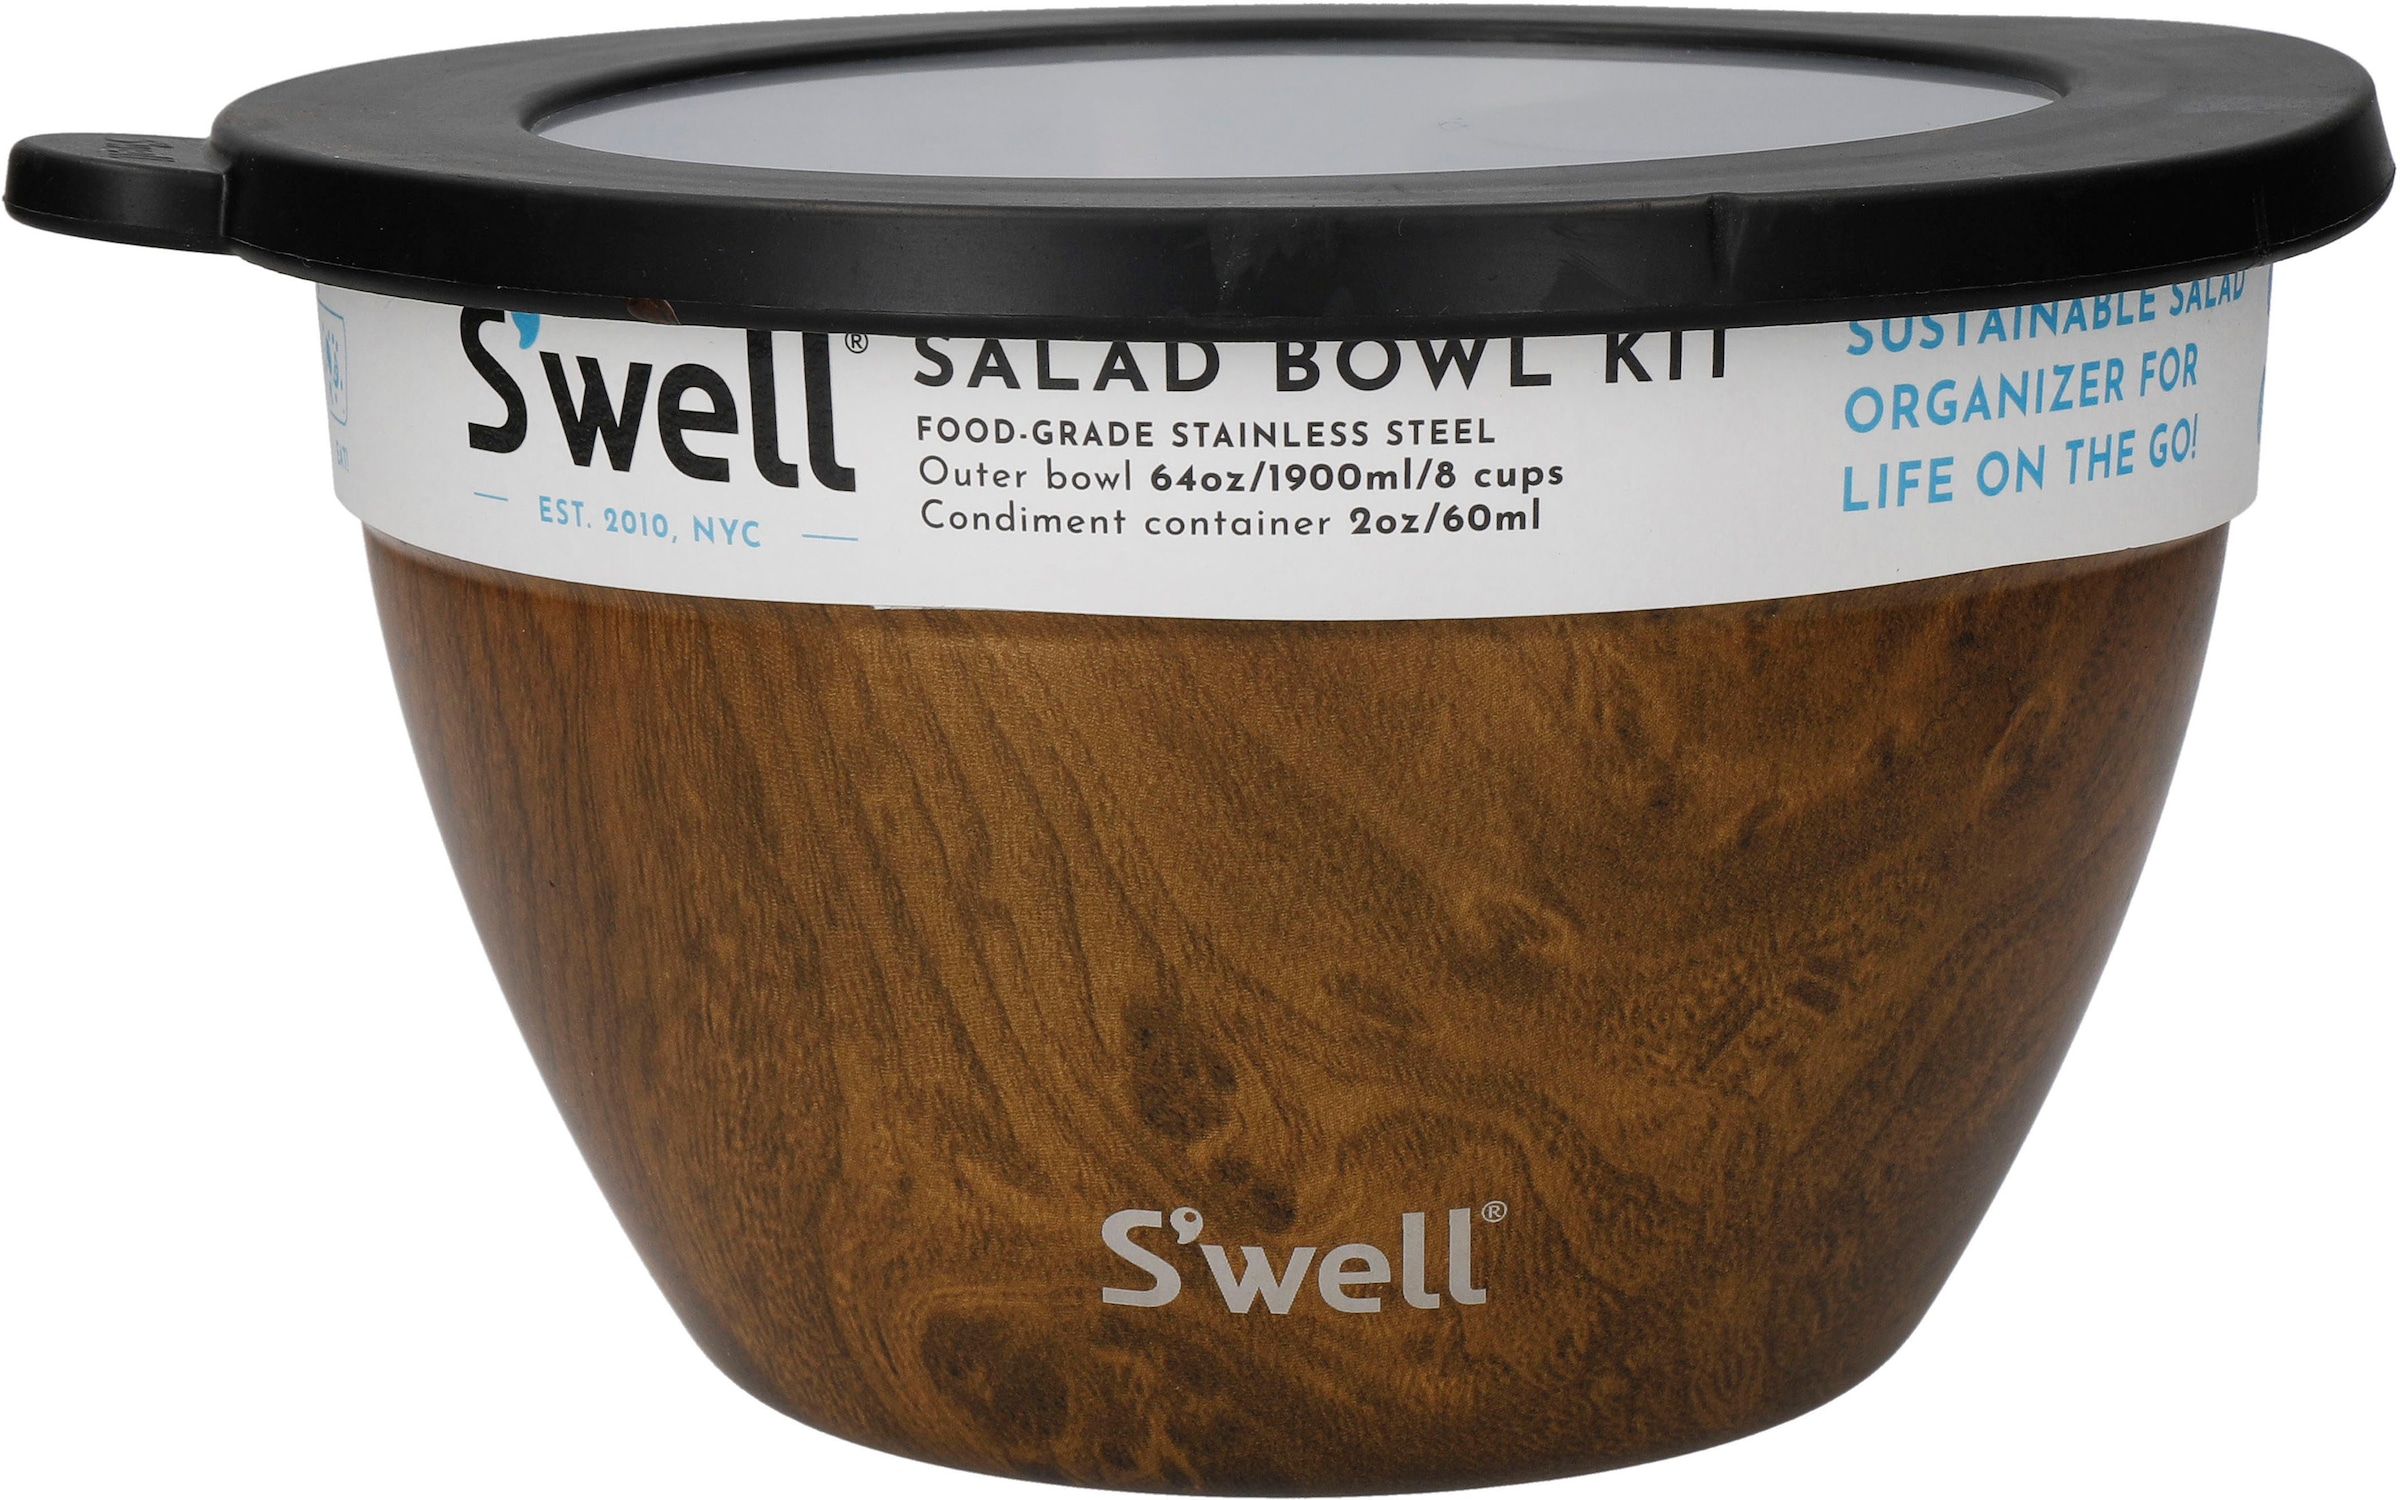 S'well Salatschüssel »S'well Onyx Salad Bowl Kit, 1.9L«, 3 tlg., aus Edelstahl, Therma-S'well®-Technologie, vakuumisolierten Außenschale